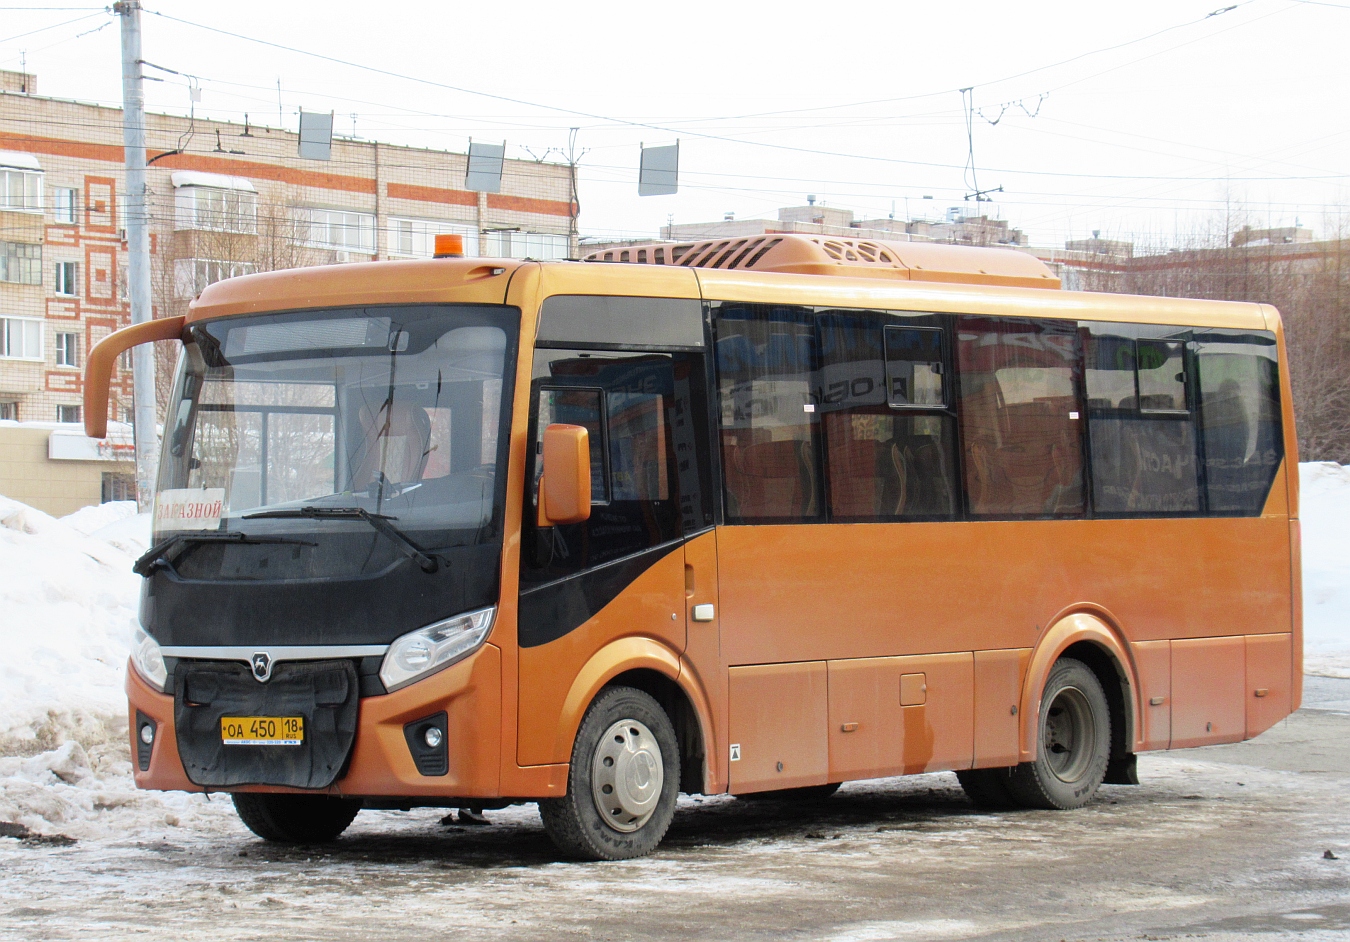 Удмуртия, ПАЗ-320405-04 "Vector Next" (межгород) № ОА 450 18